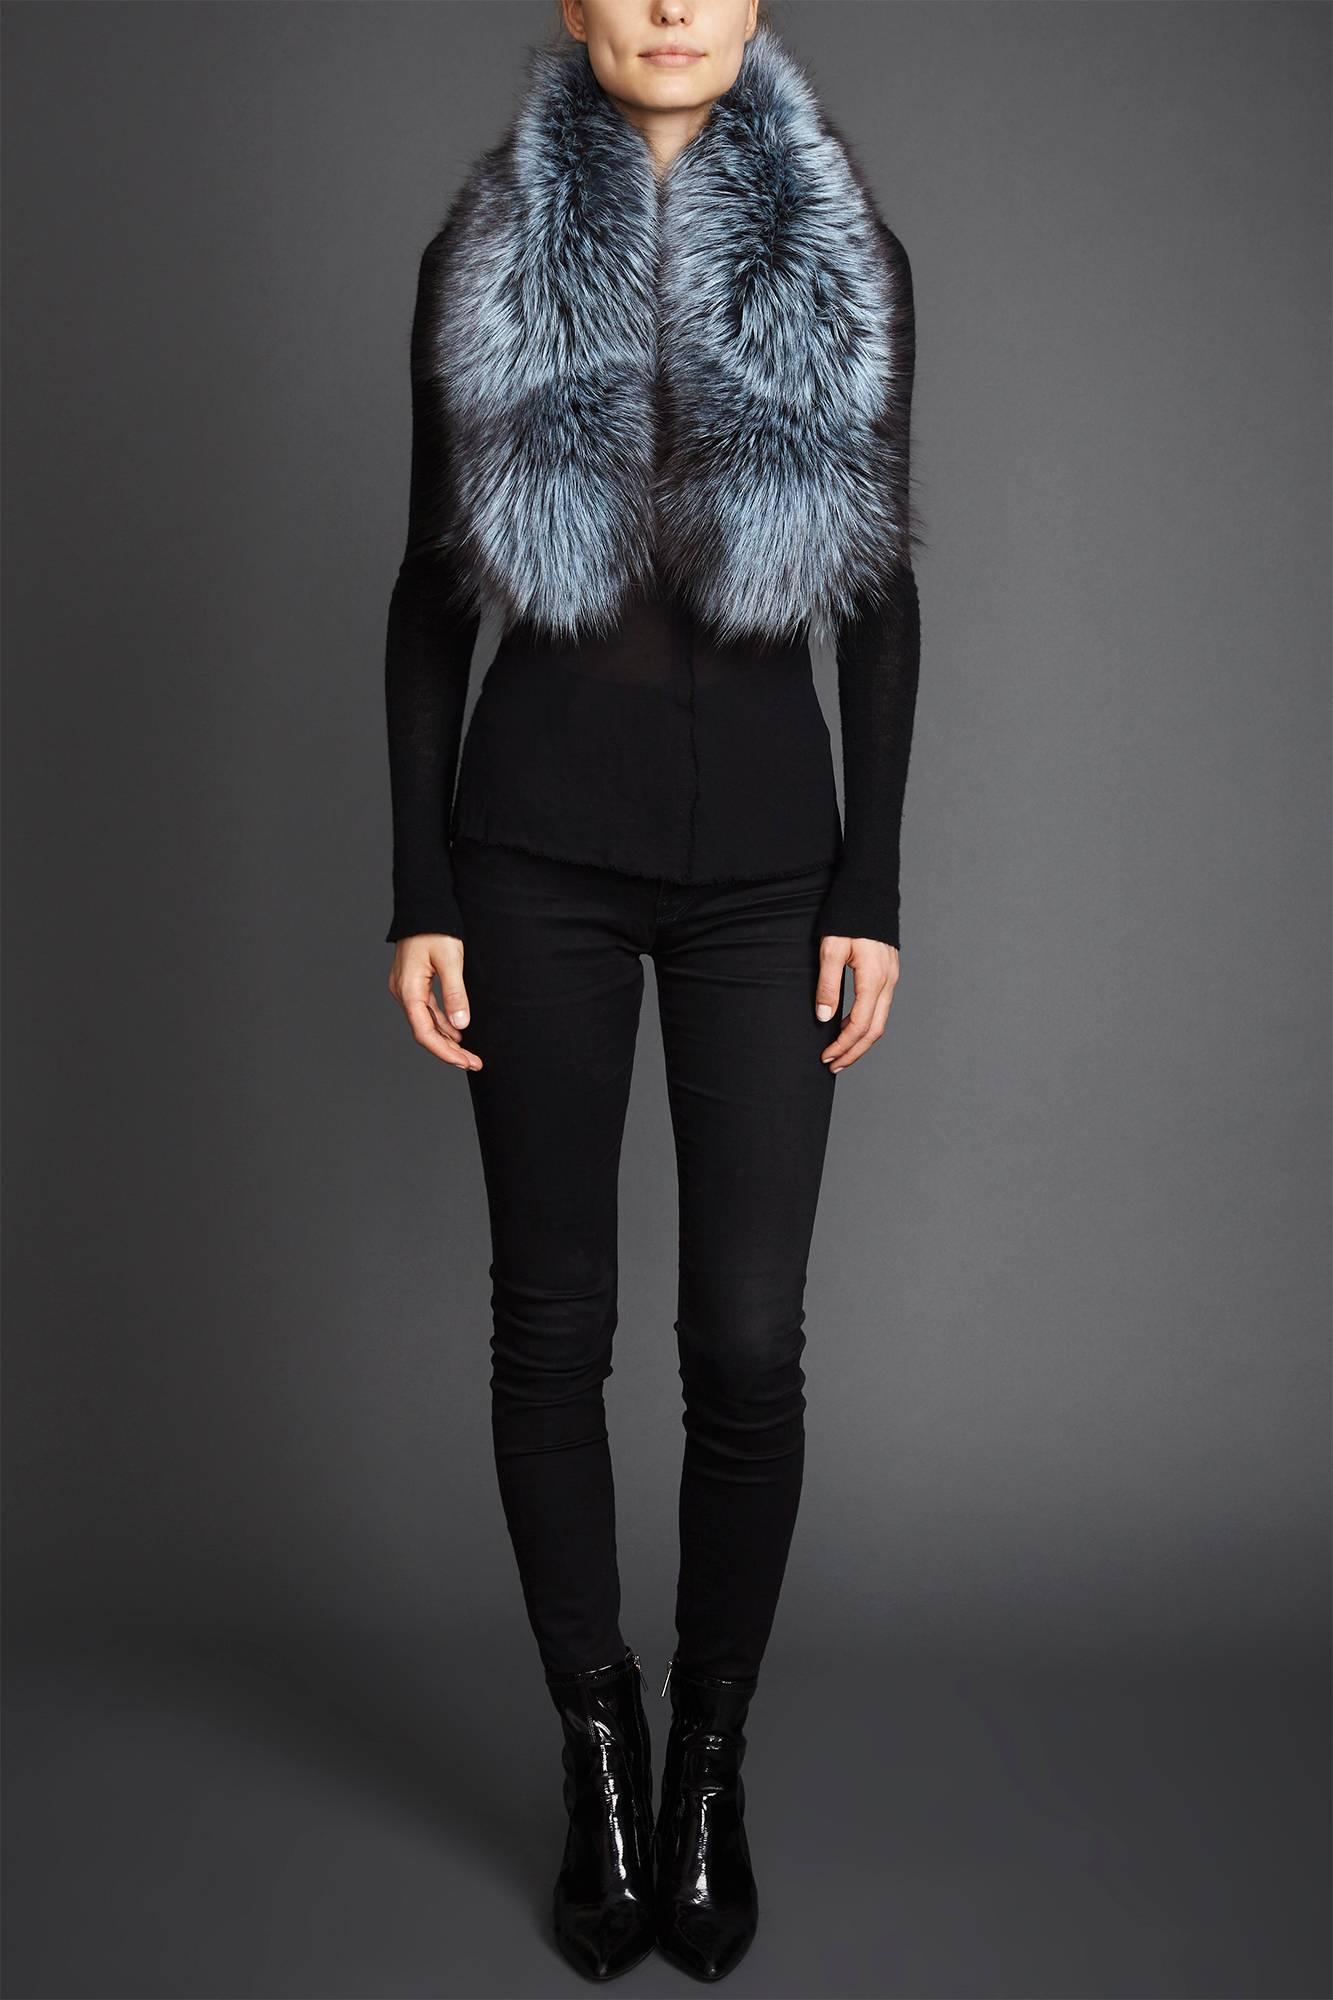 Black Verheyen London Lapel Cross-through Collar in Iced Topaz Fox Fur - Brand New